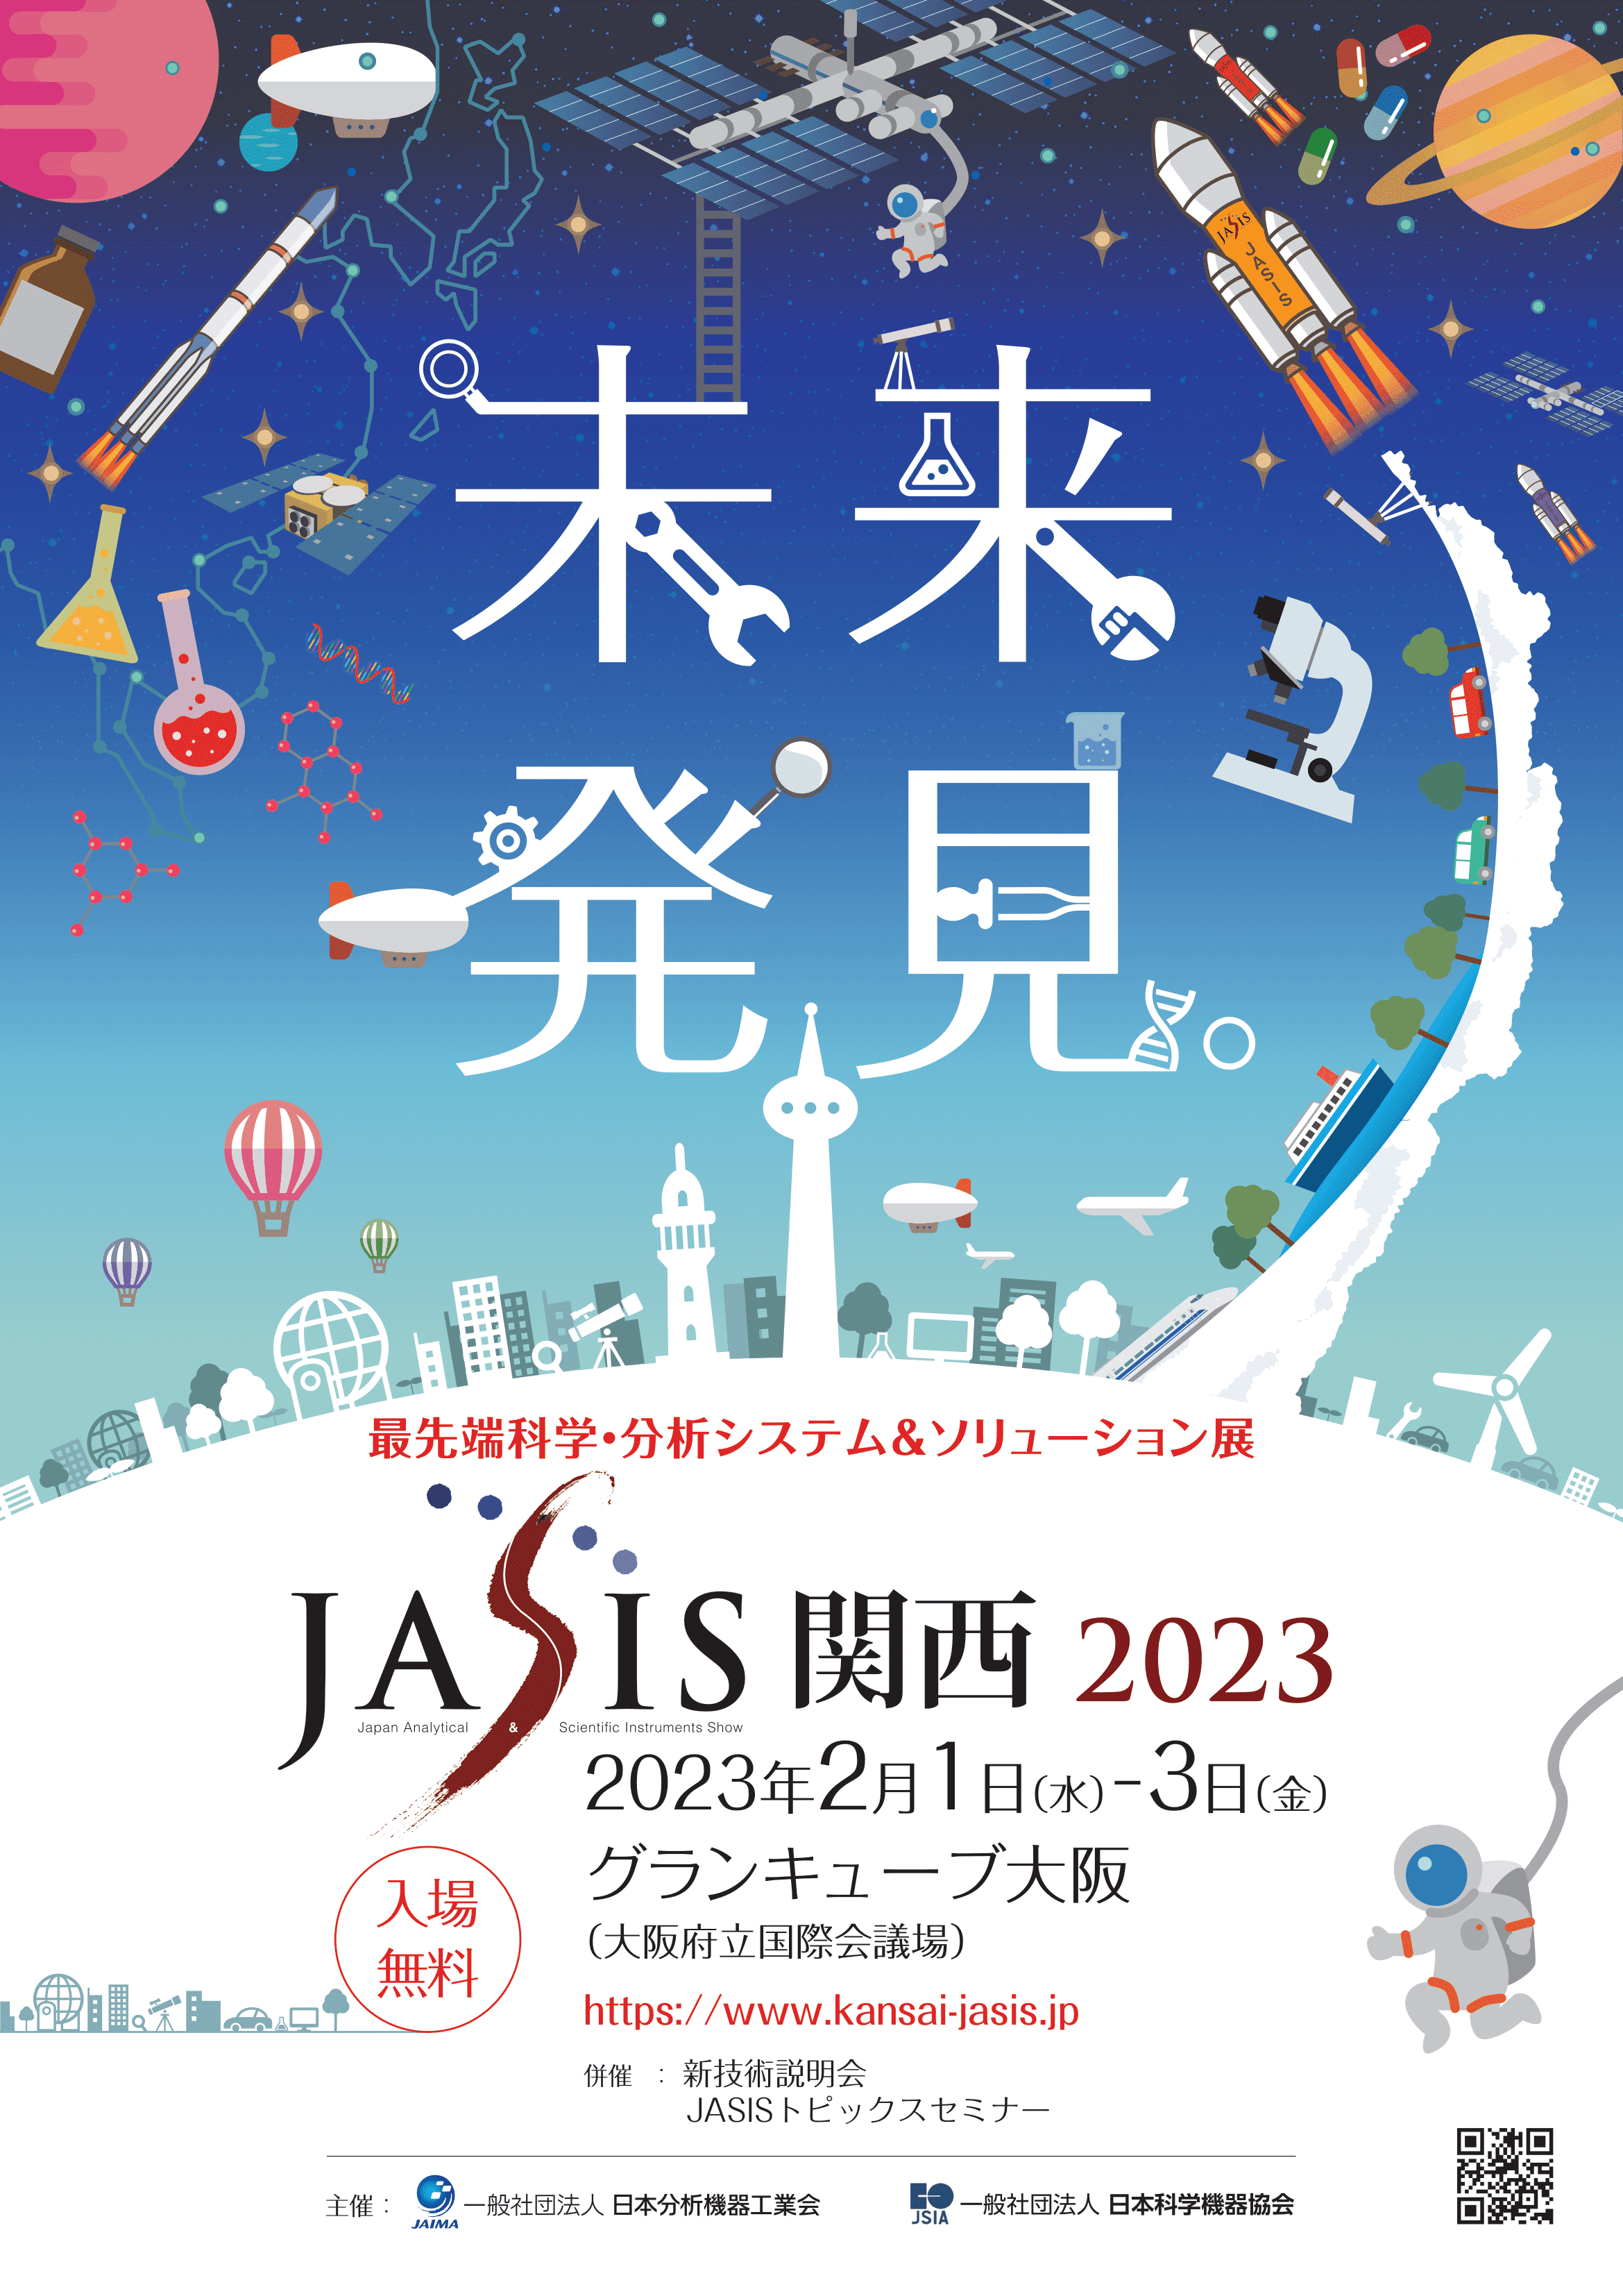 JASISkansai2023_poster